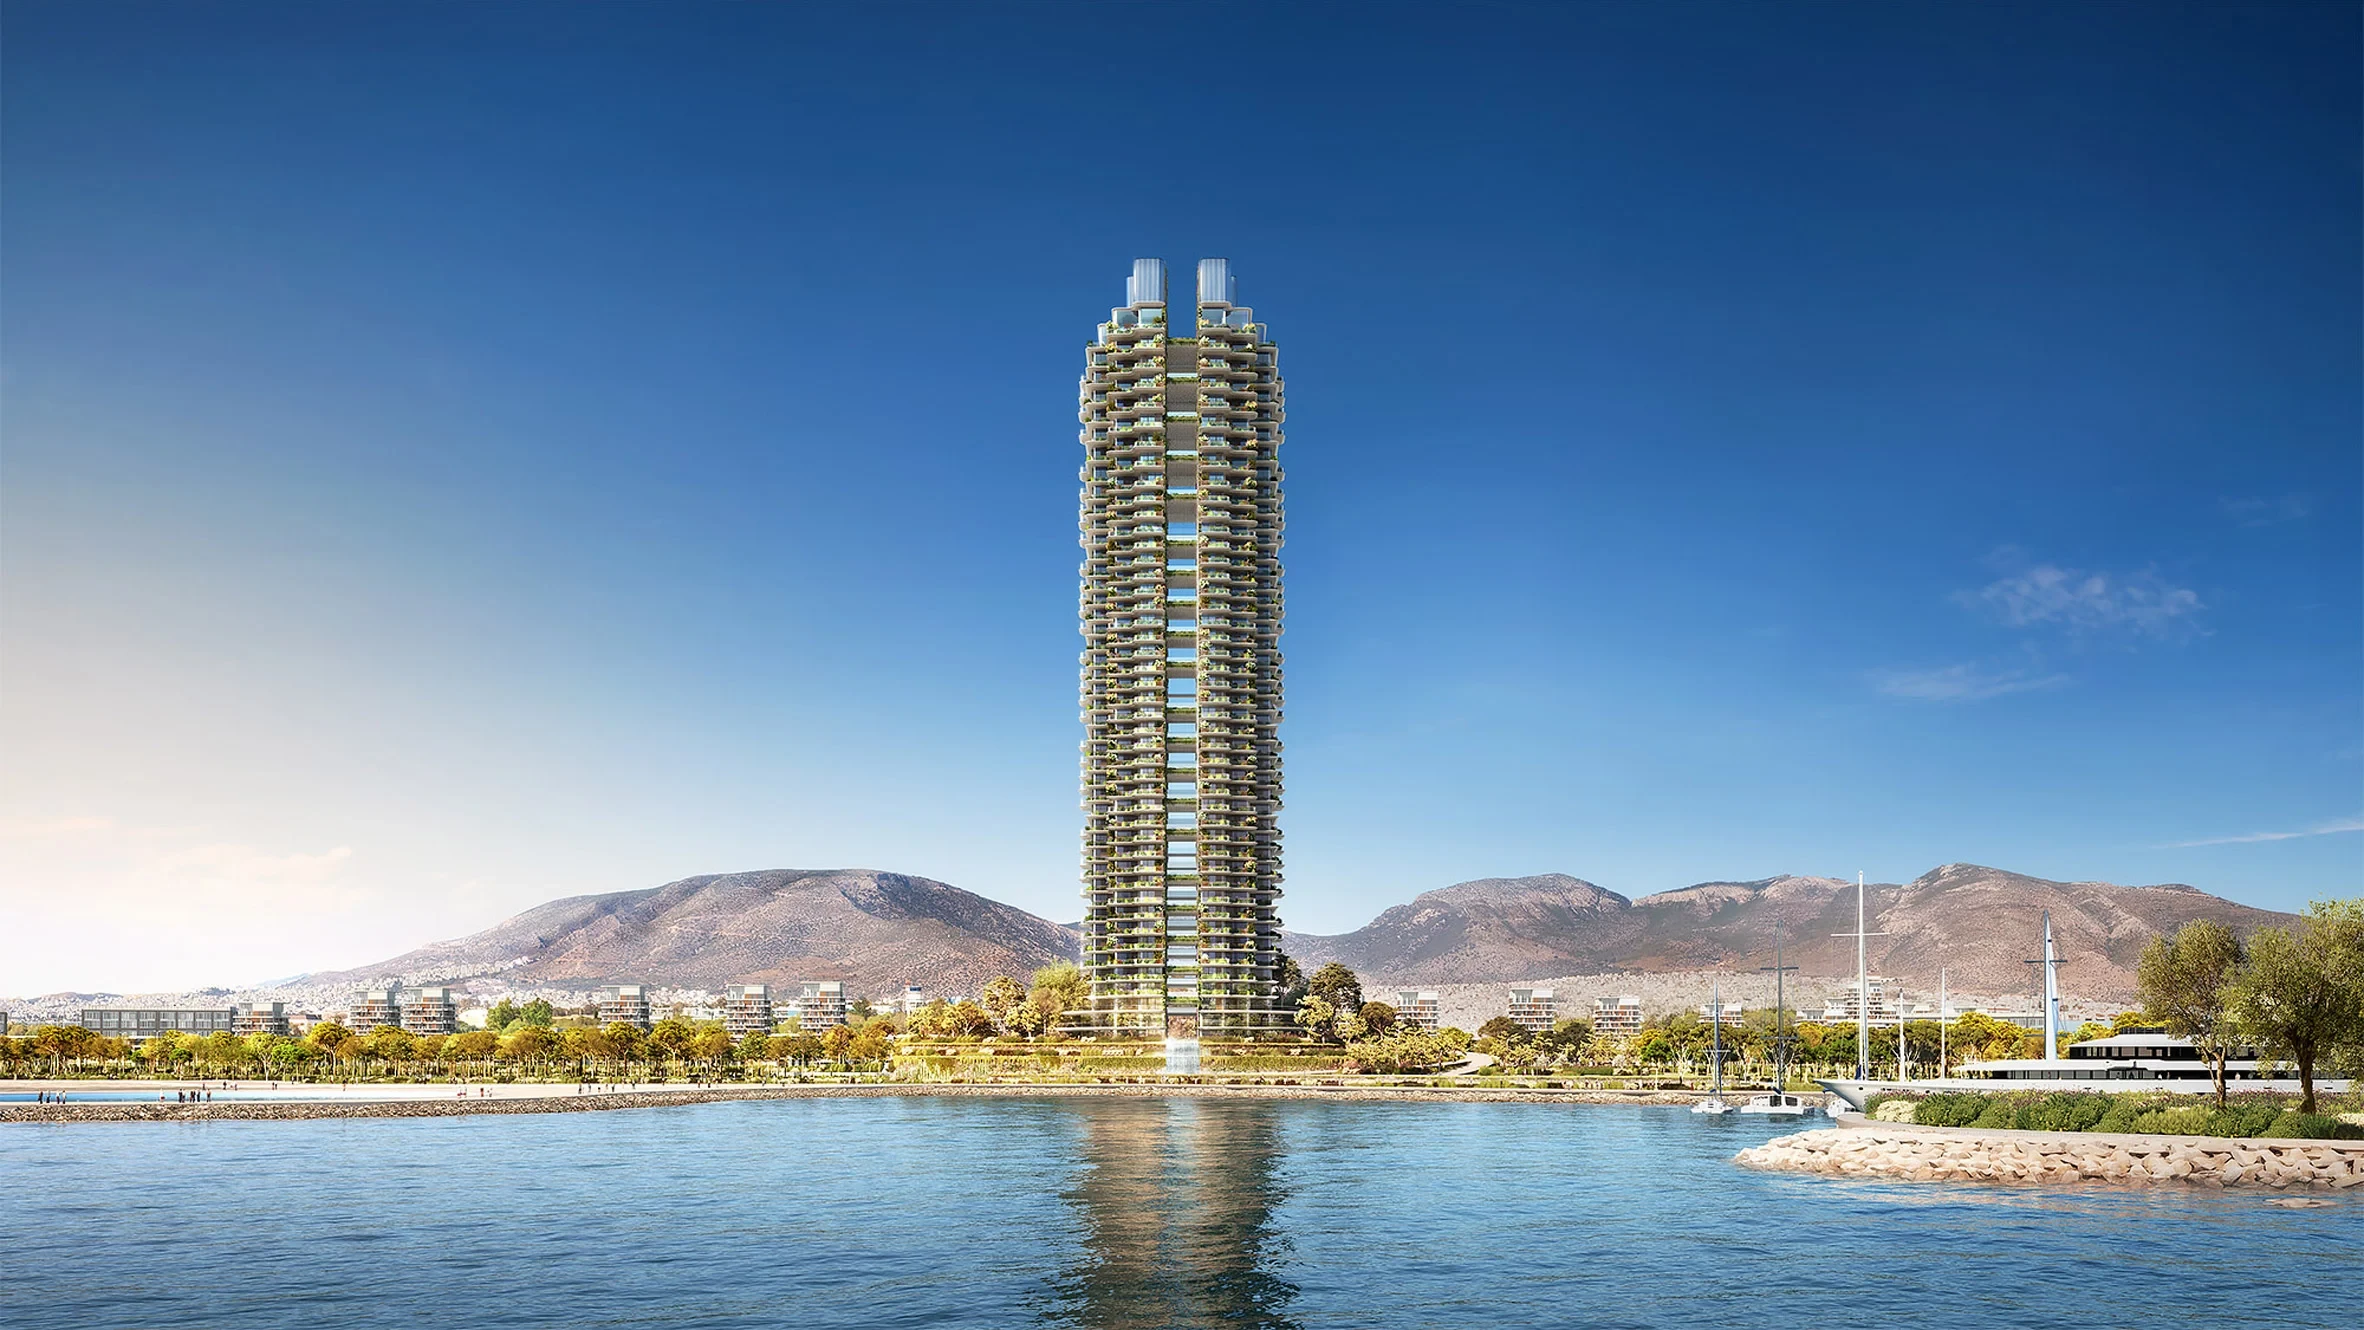 More information about "Σε Intrakat – Bouygues ο πύργος κατοικιών Marina Tower"